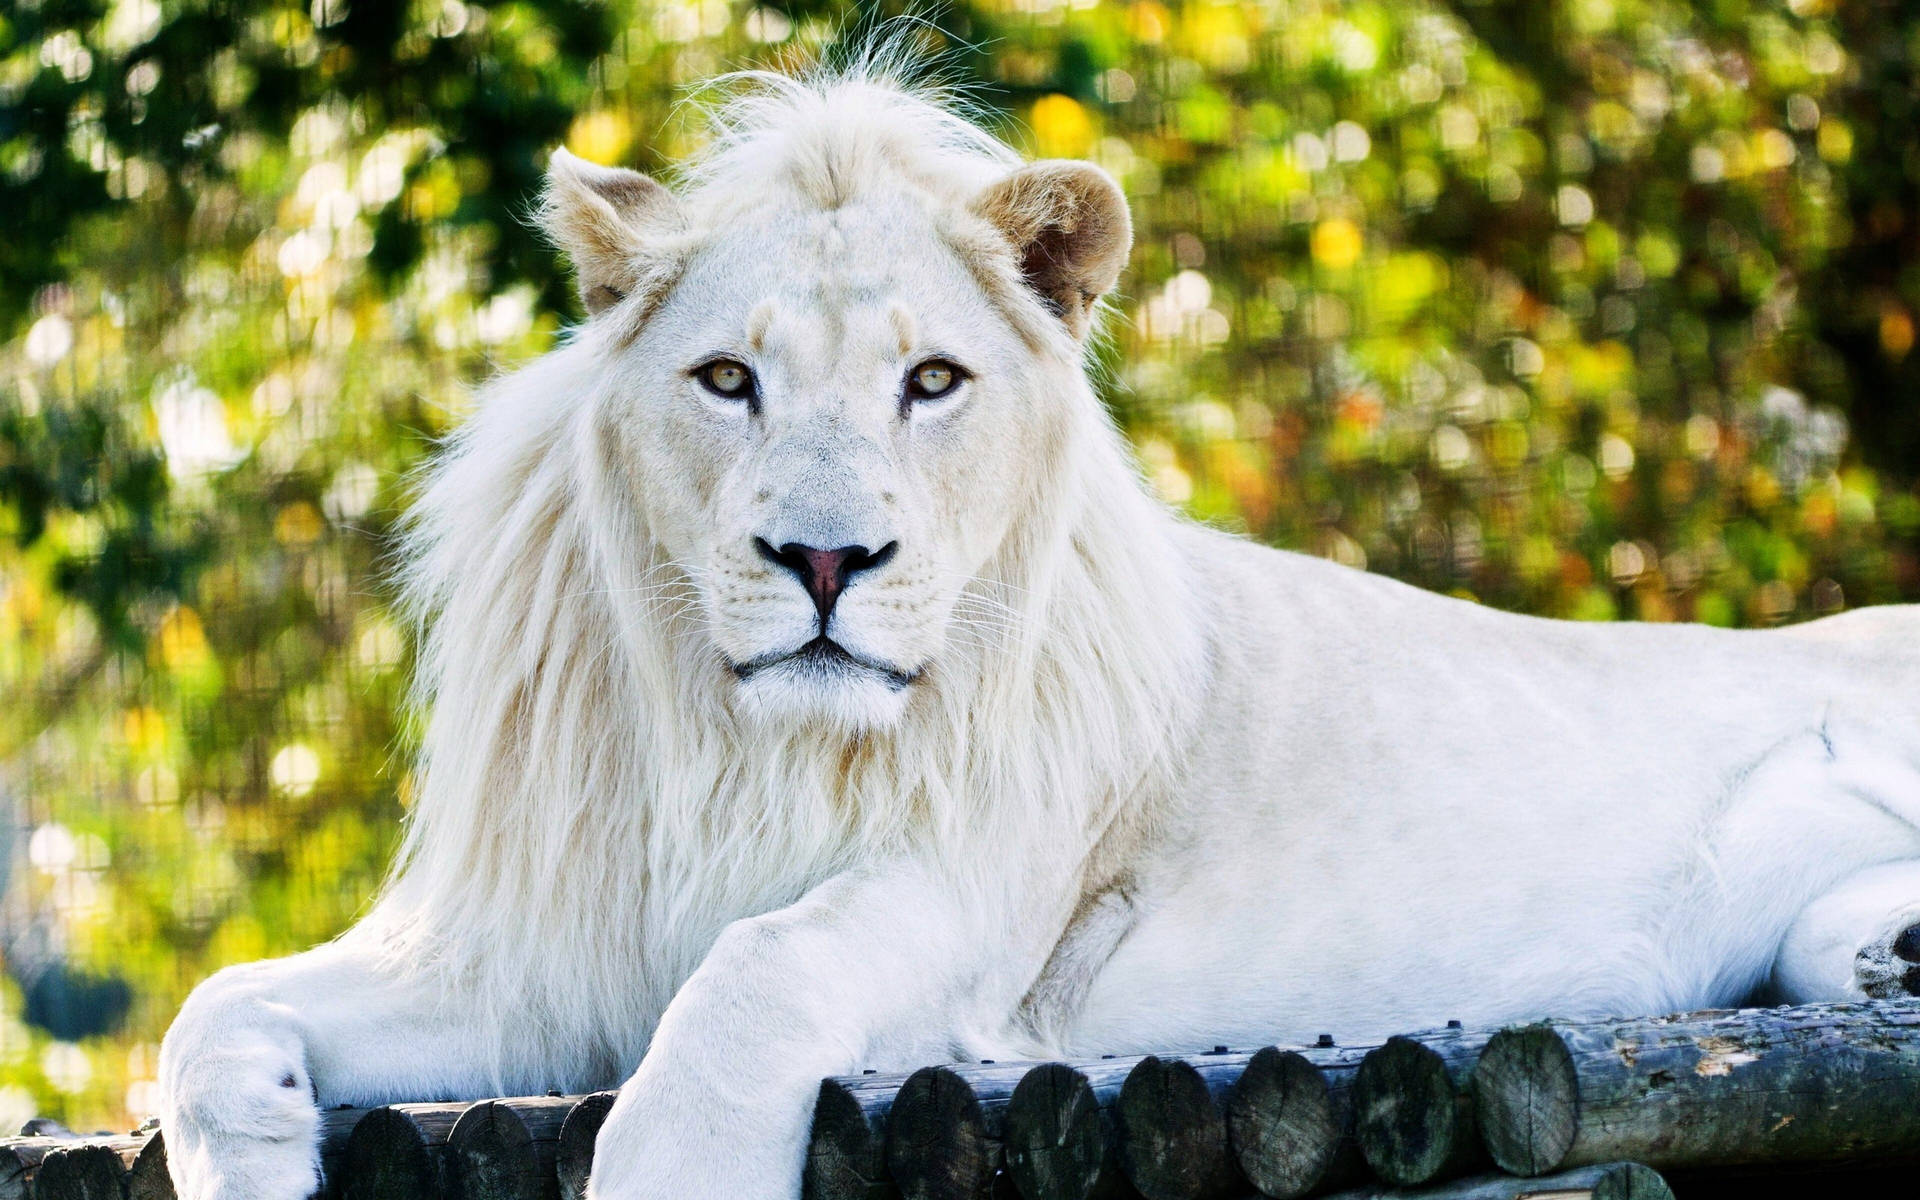 White Lion Albino Wallpaper